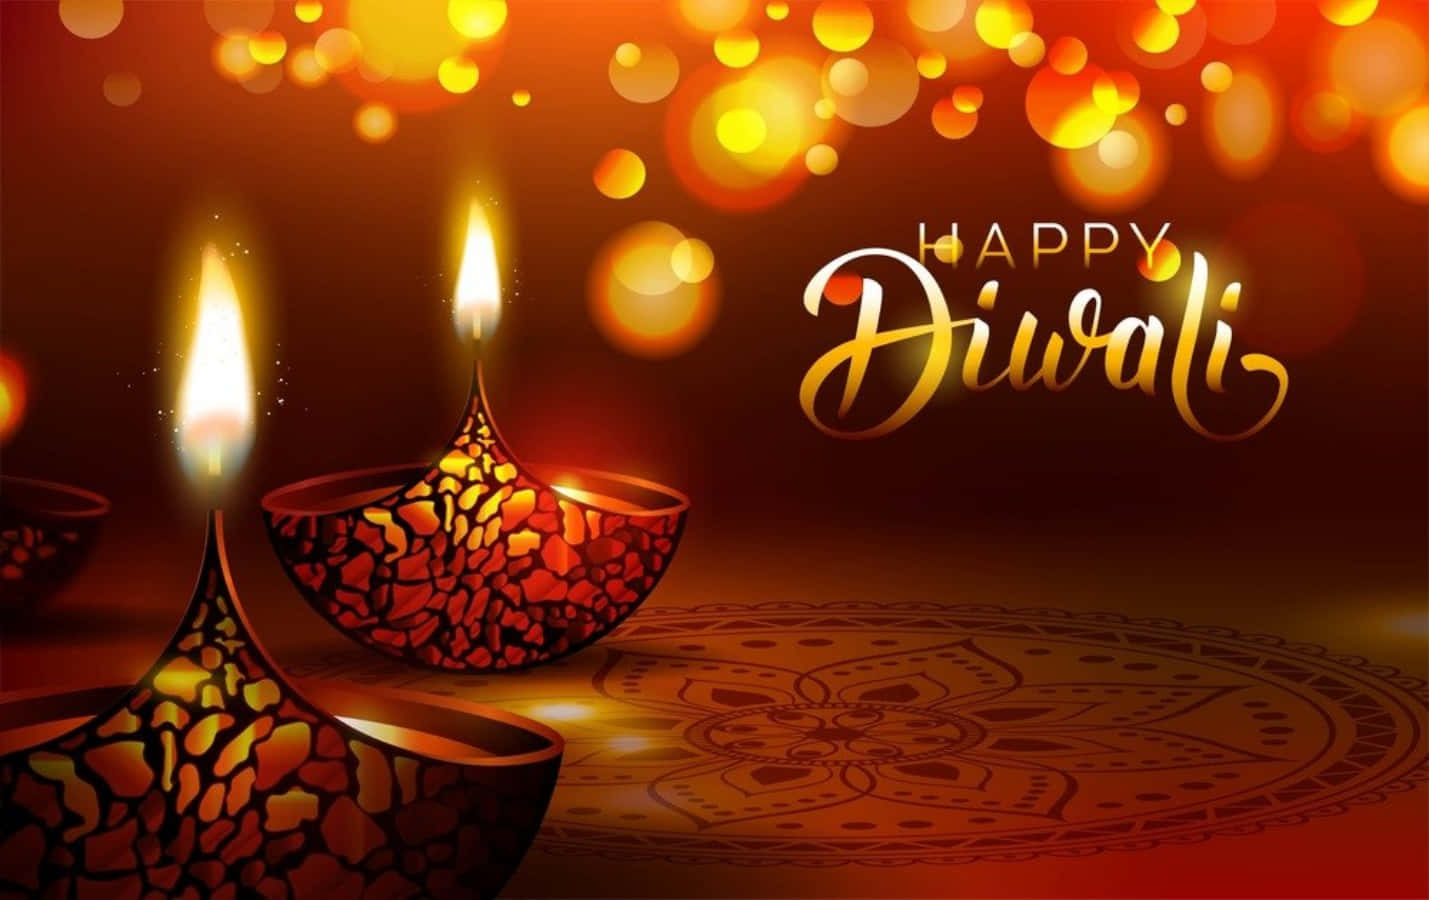 Felizescumprimentos De Diwali Com Velas E Efeito Bokeh Para Fundo De Computador Ou Celular.